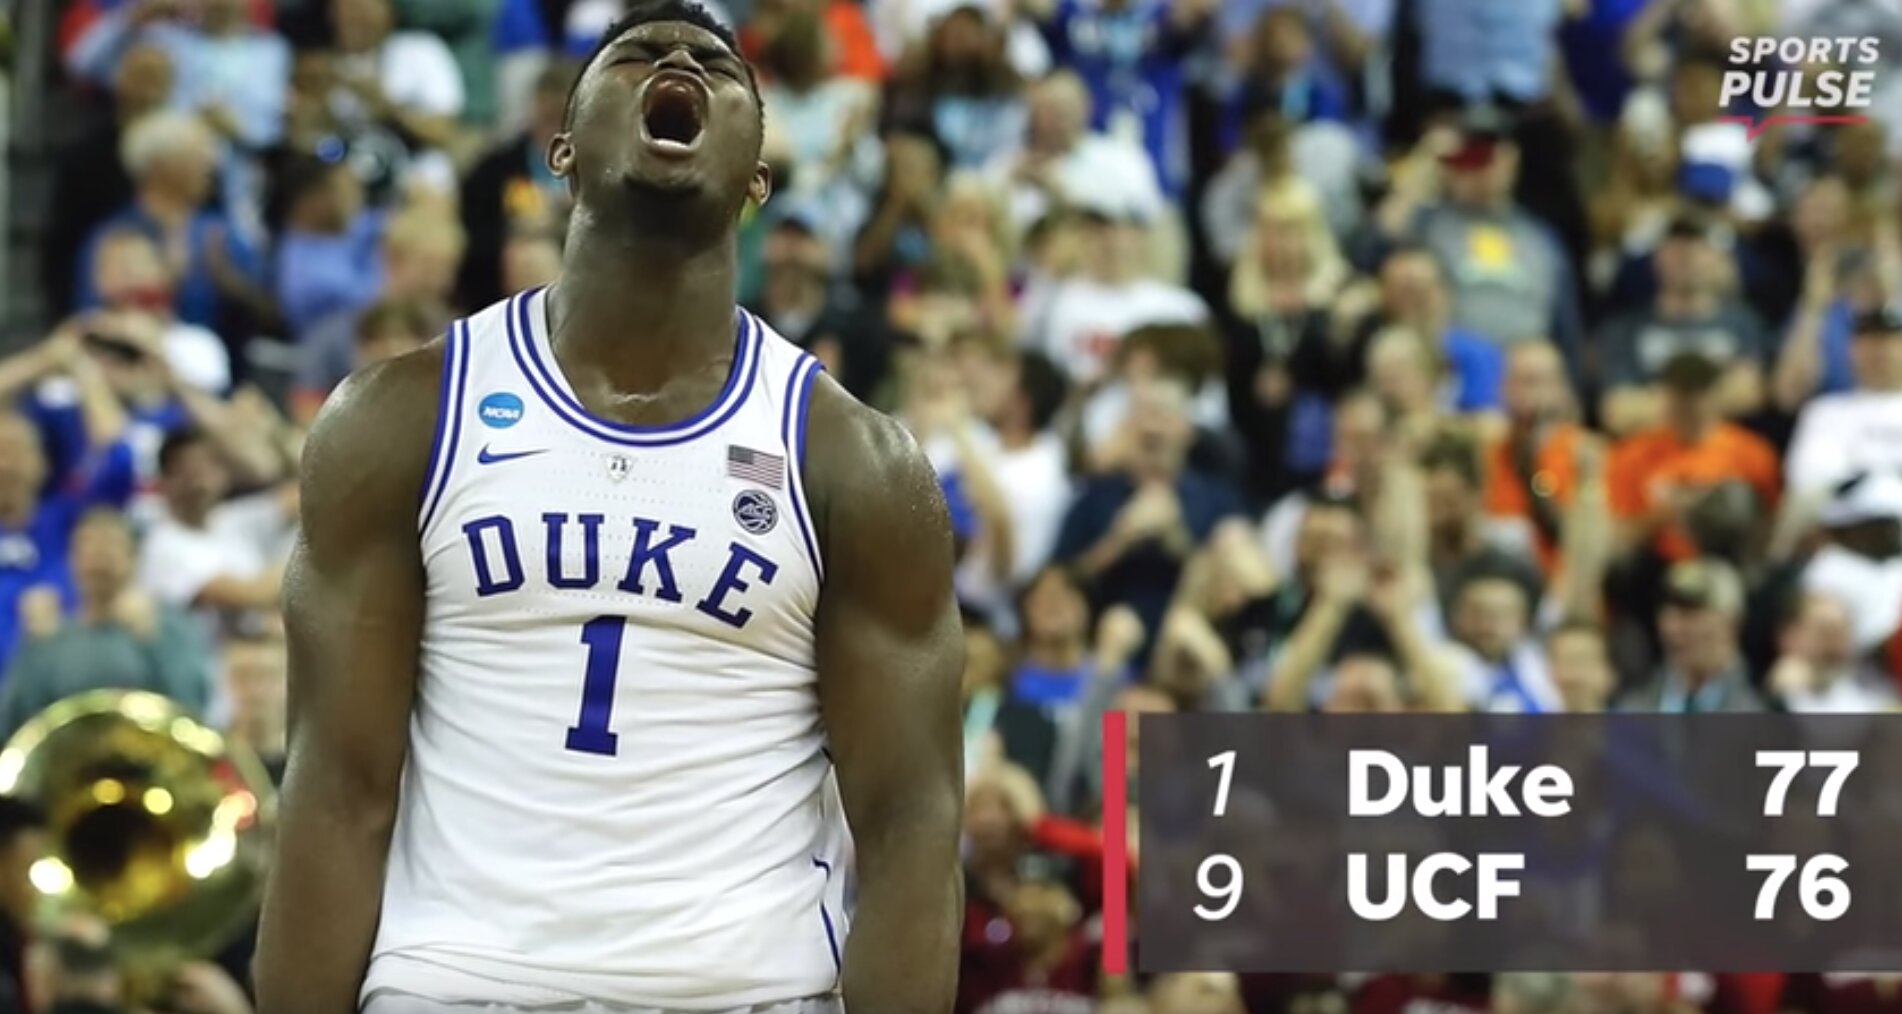 Zion, Duke escape massive upset against UCF